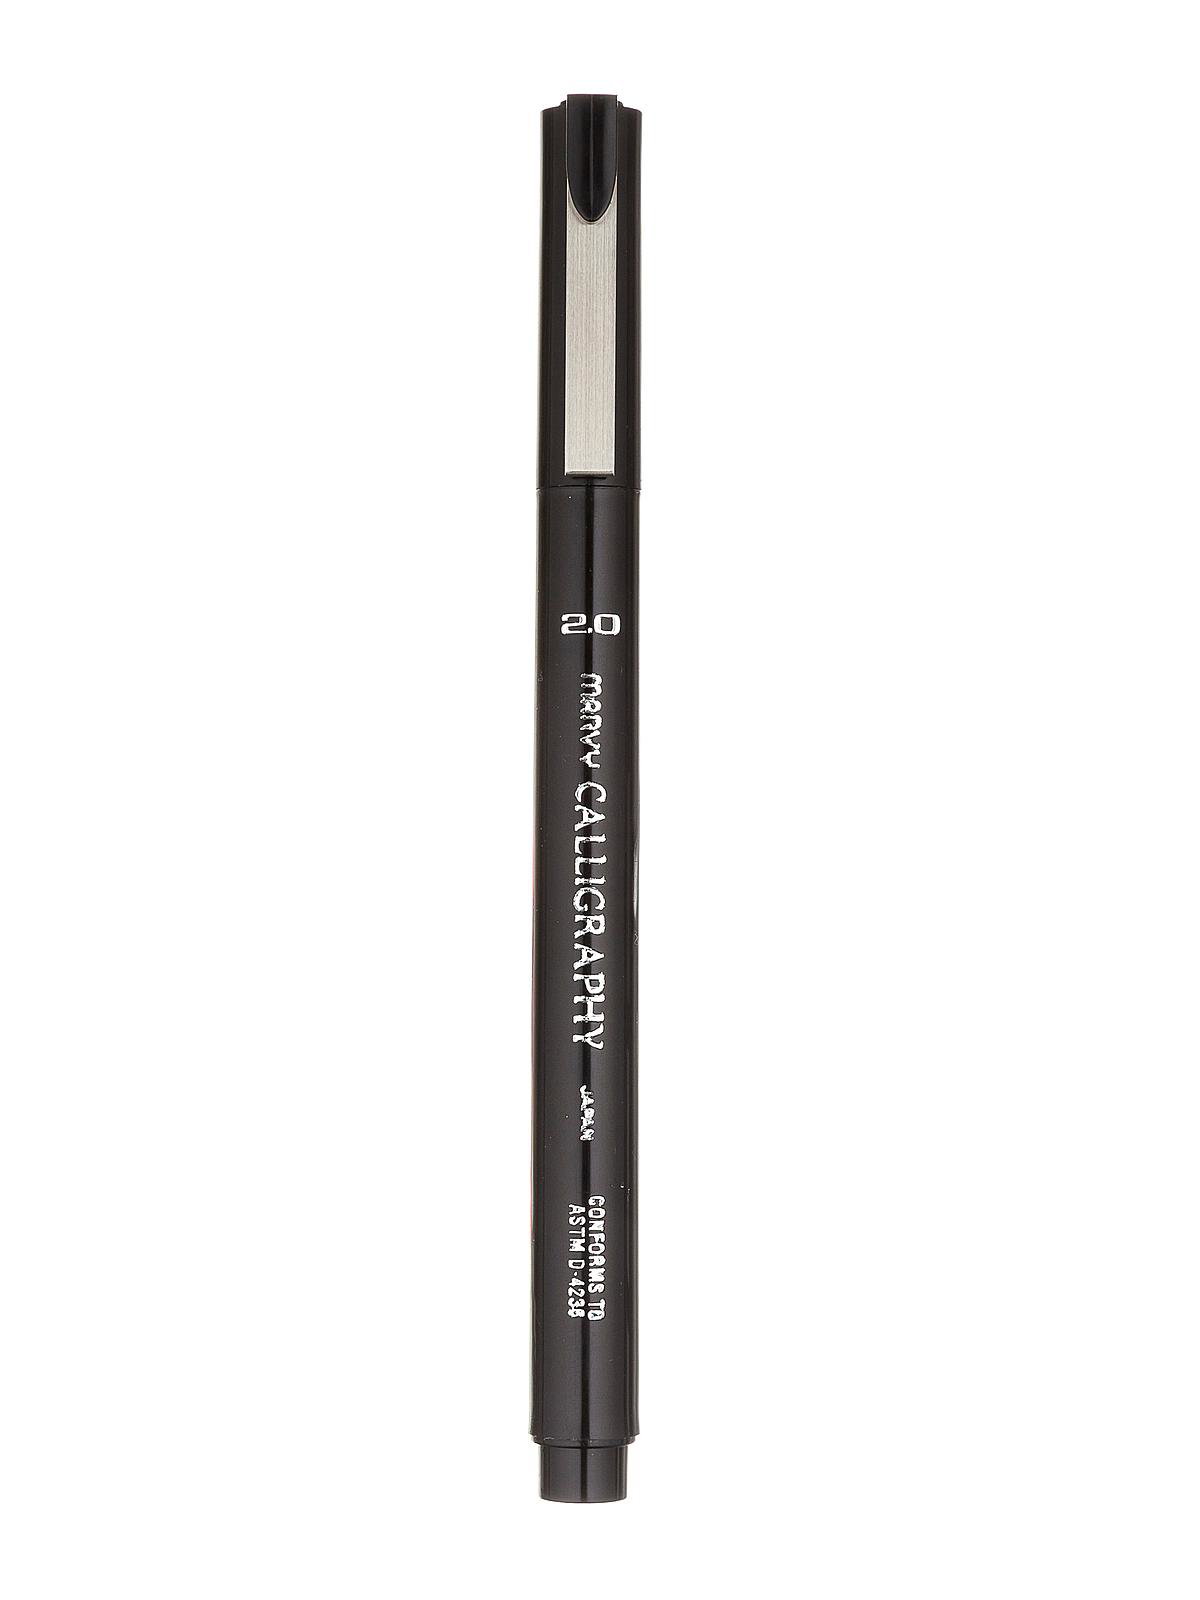 Uchida Calligraphy Pen Marker 5.0mm Black